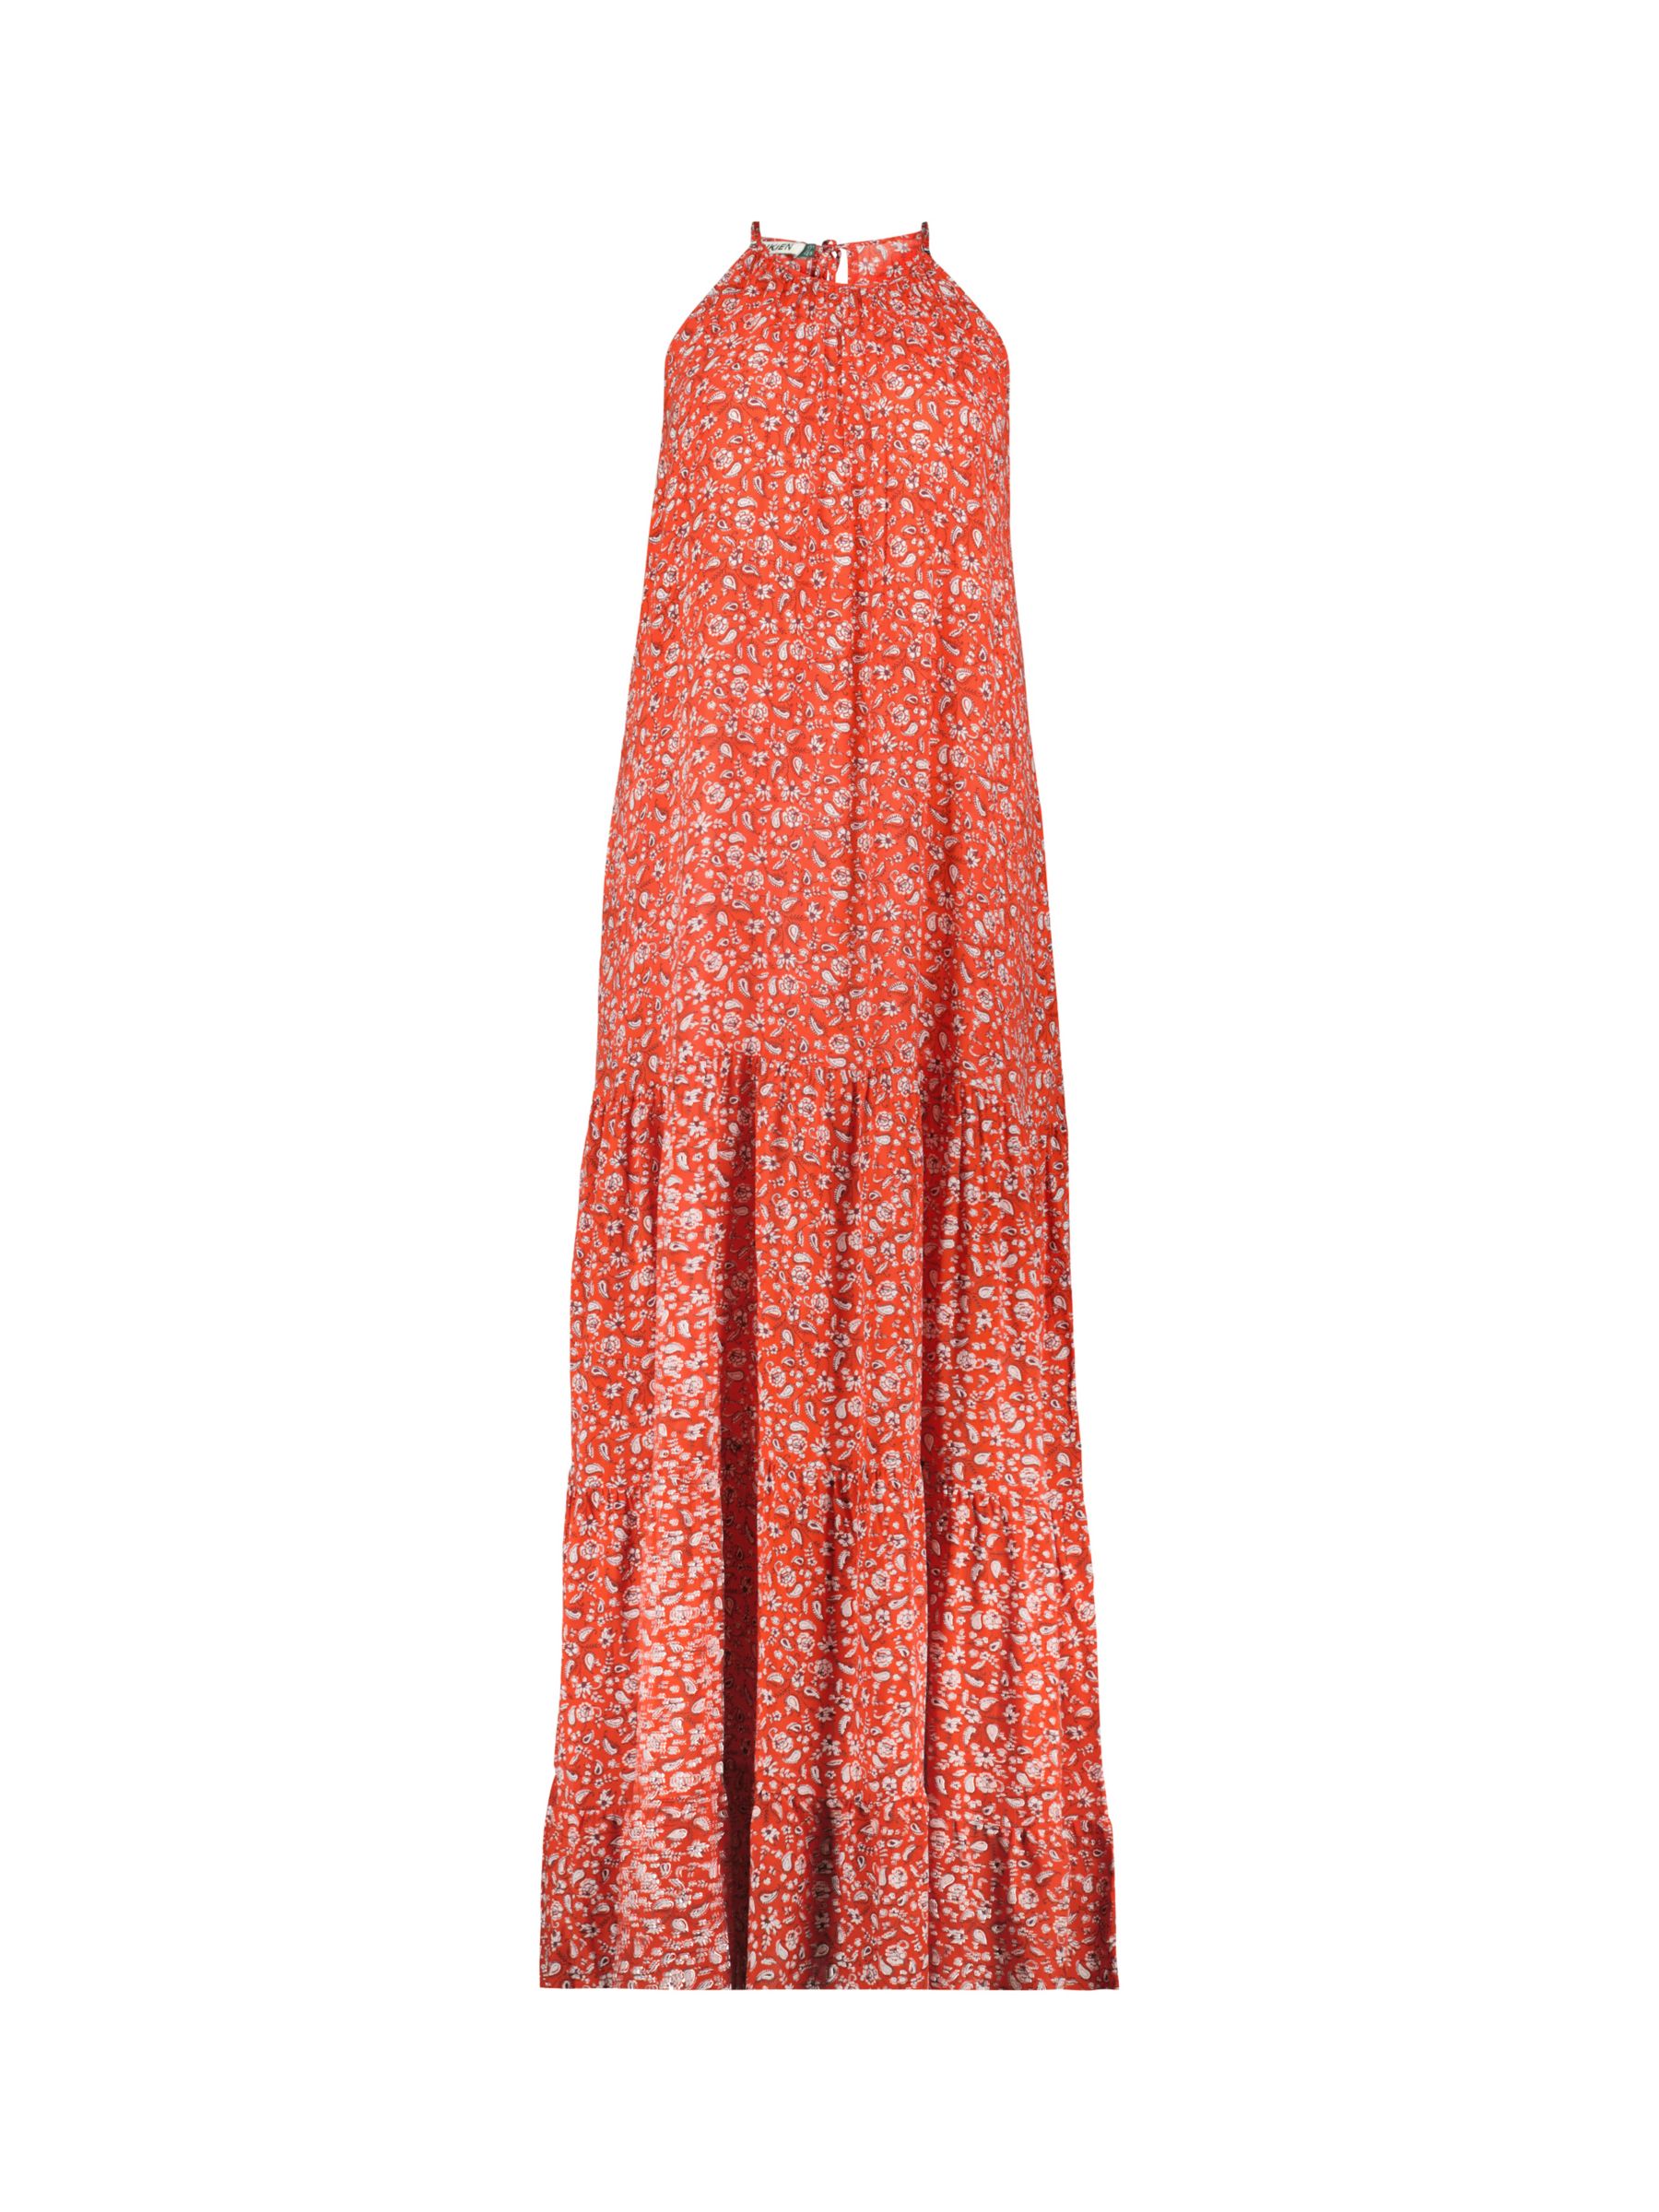 Baukjen Everly Floral Print Maxi Dress, Tangerine/Multi at John Lewis ...